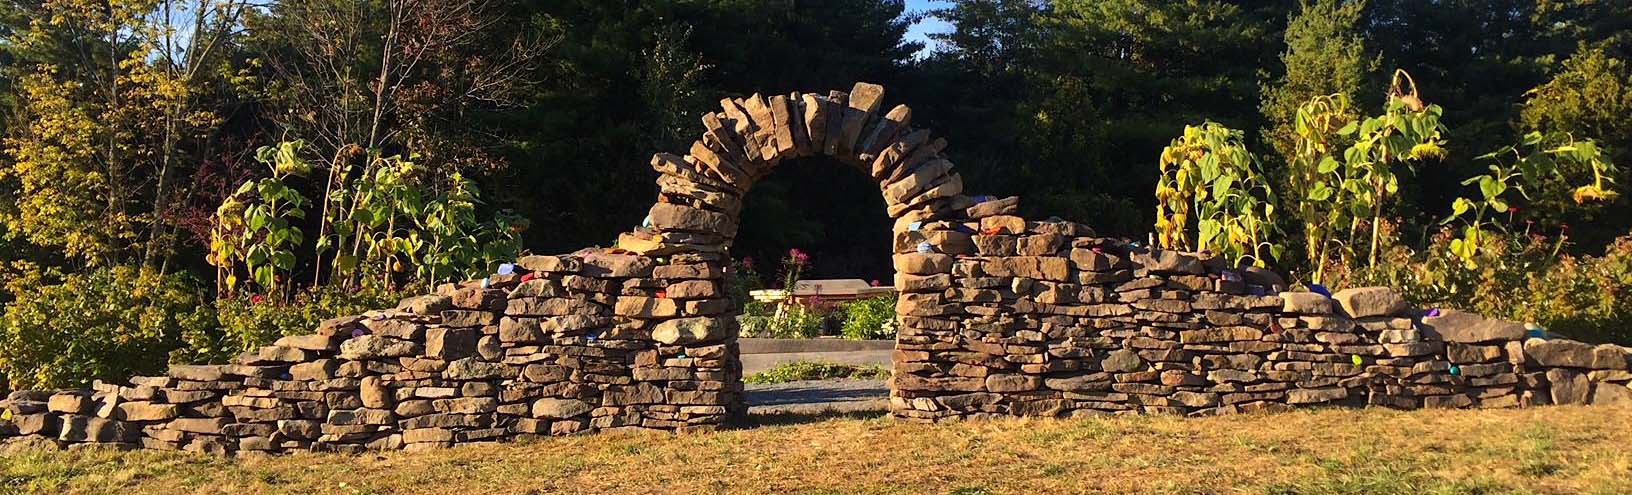 My Earthwork - Stone Project in Monkton, Vermont